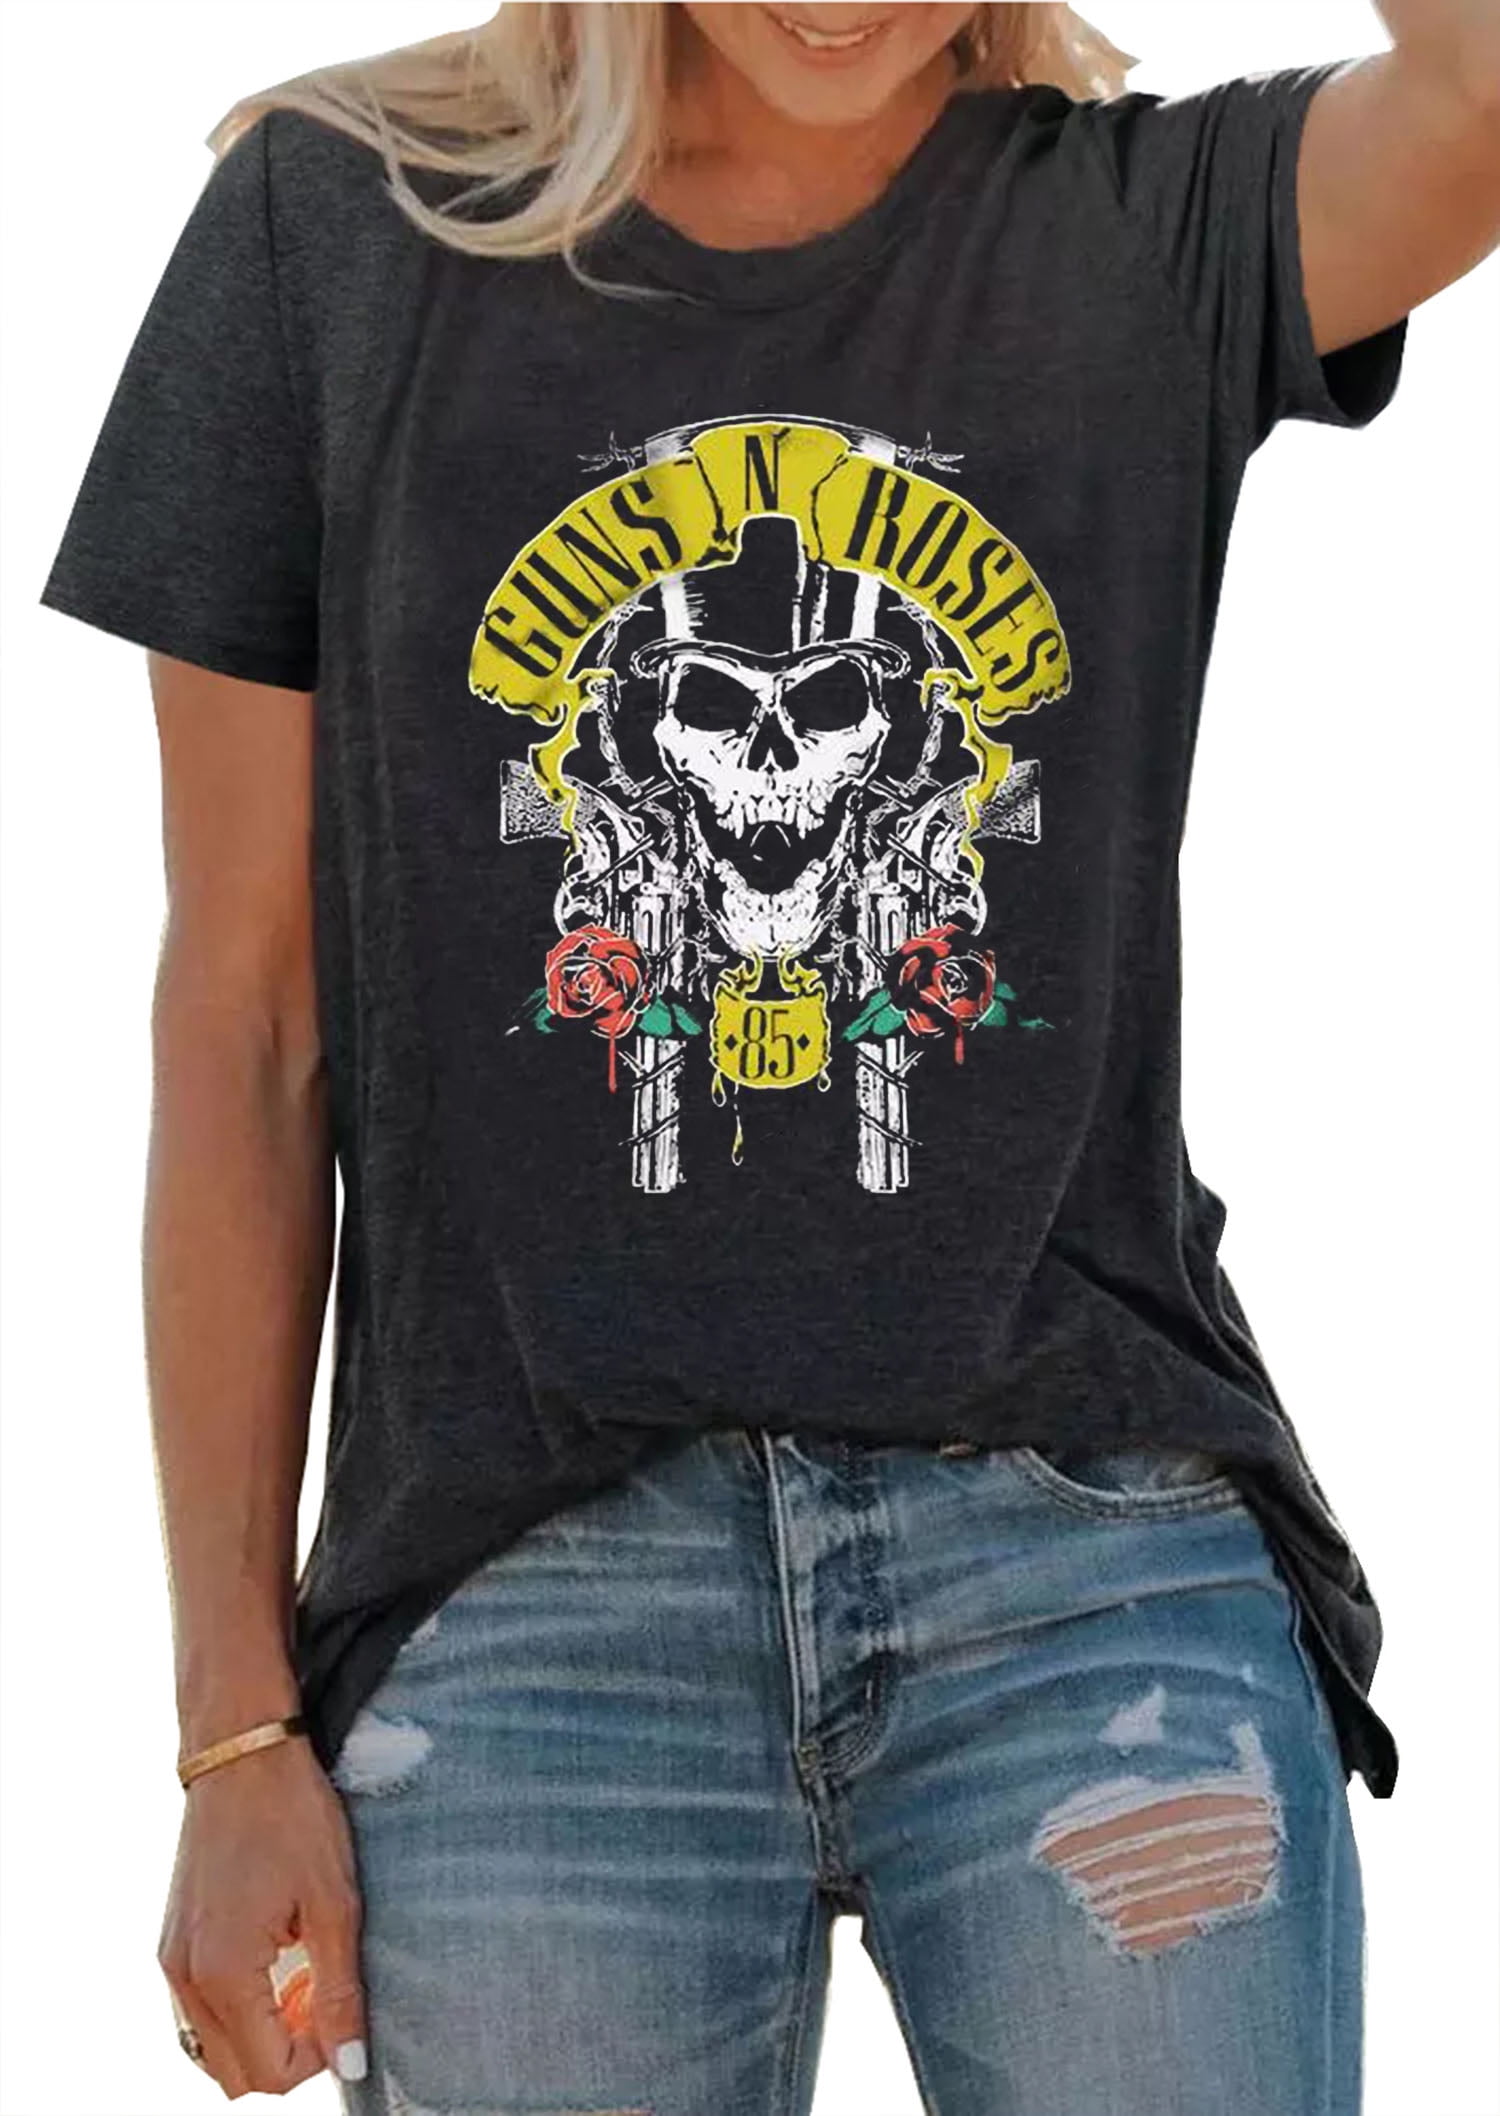 Guns N' Roses Skull Shirts for Women Vintage Rock Music T-Shirt Tops ...